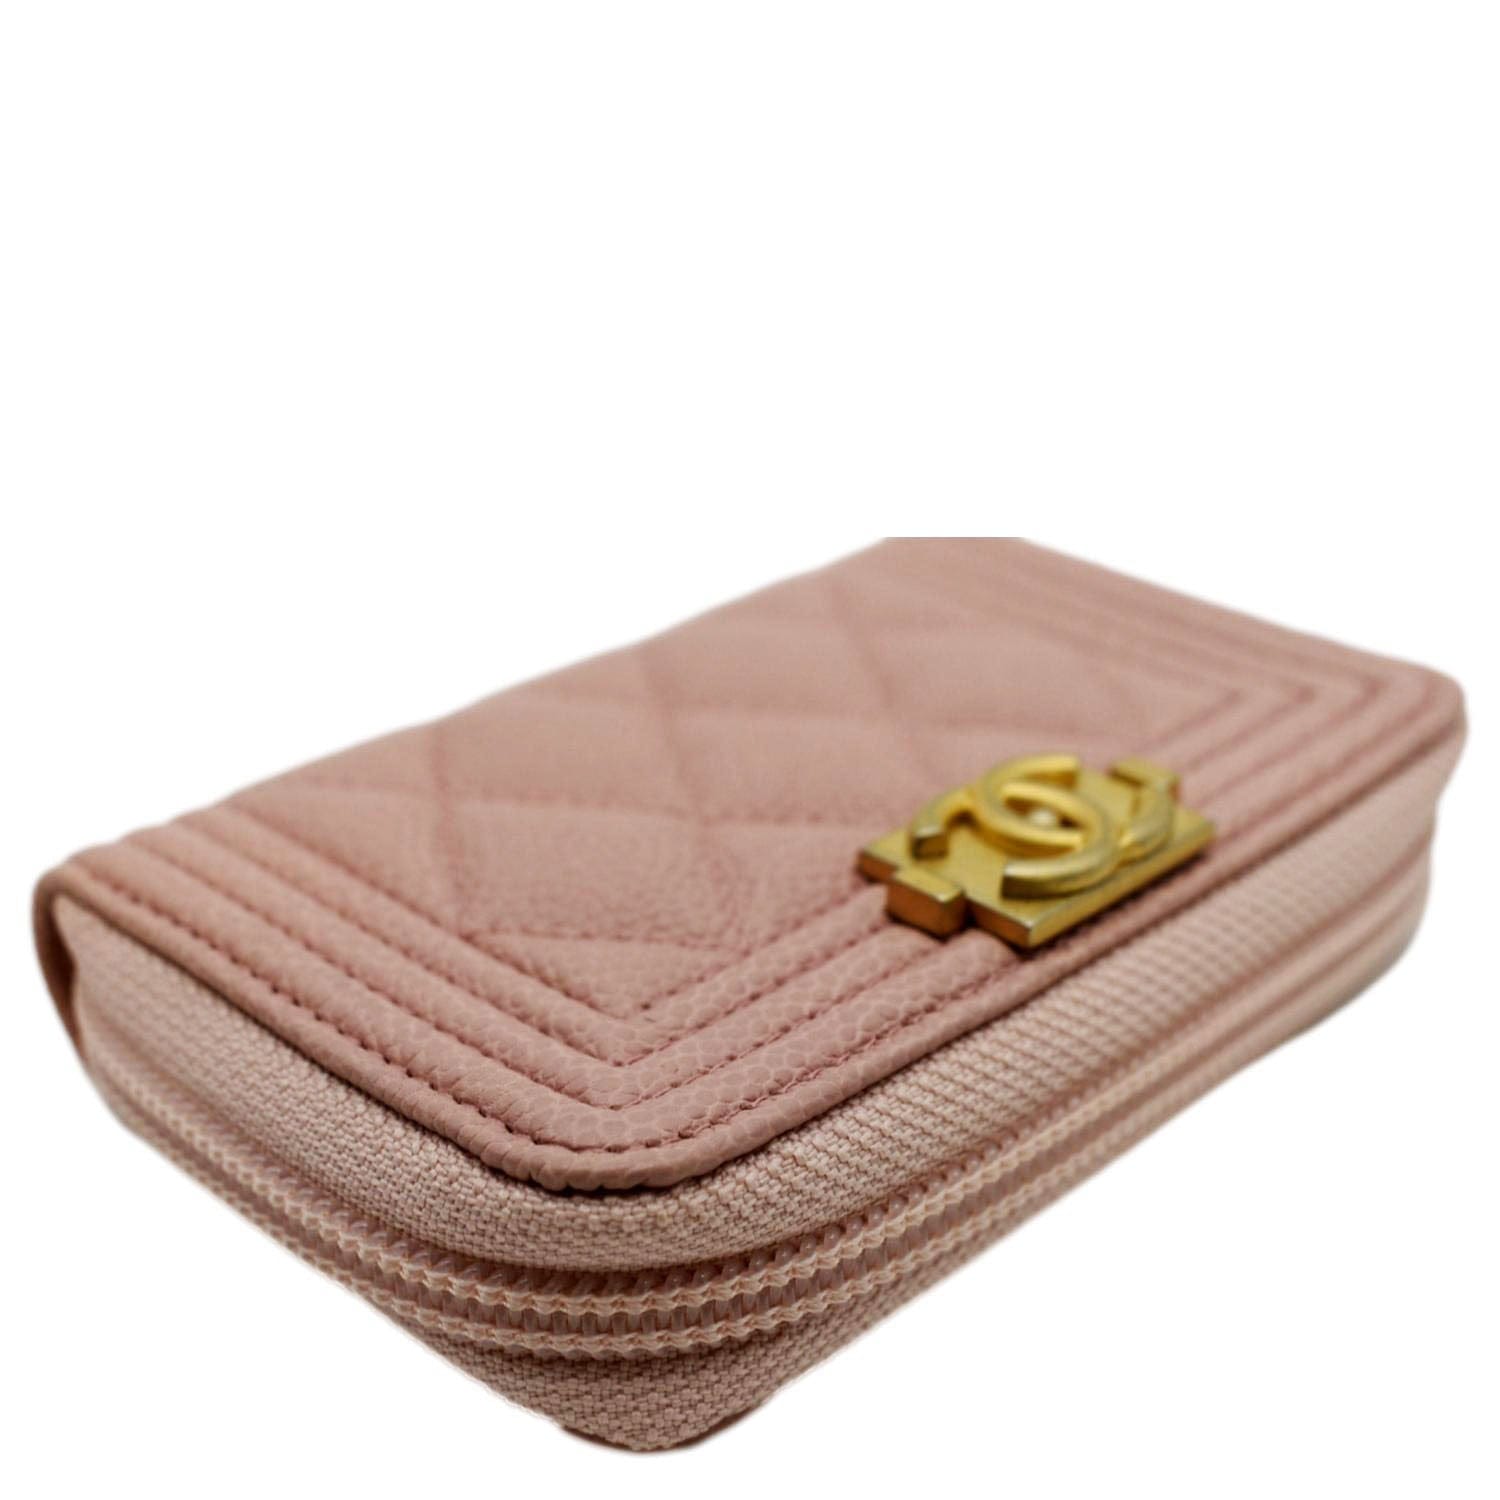 chanel wallet golden brown